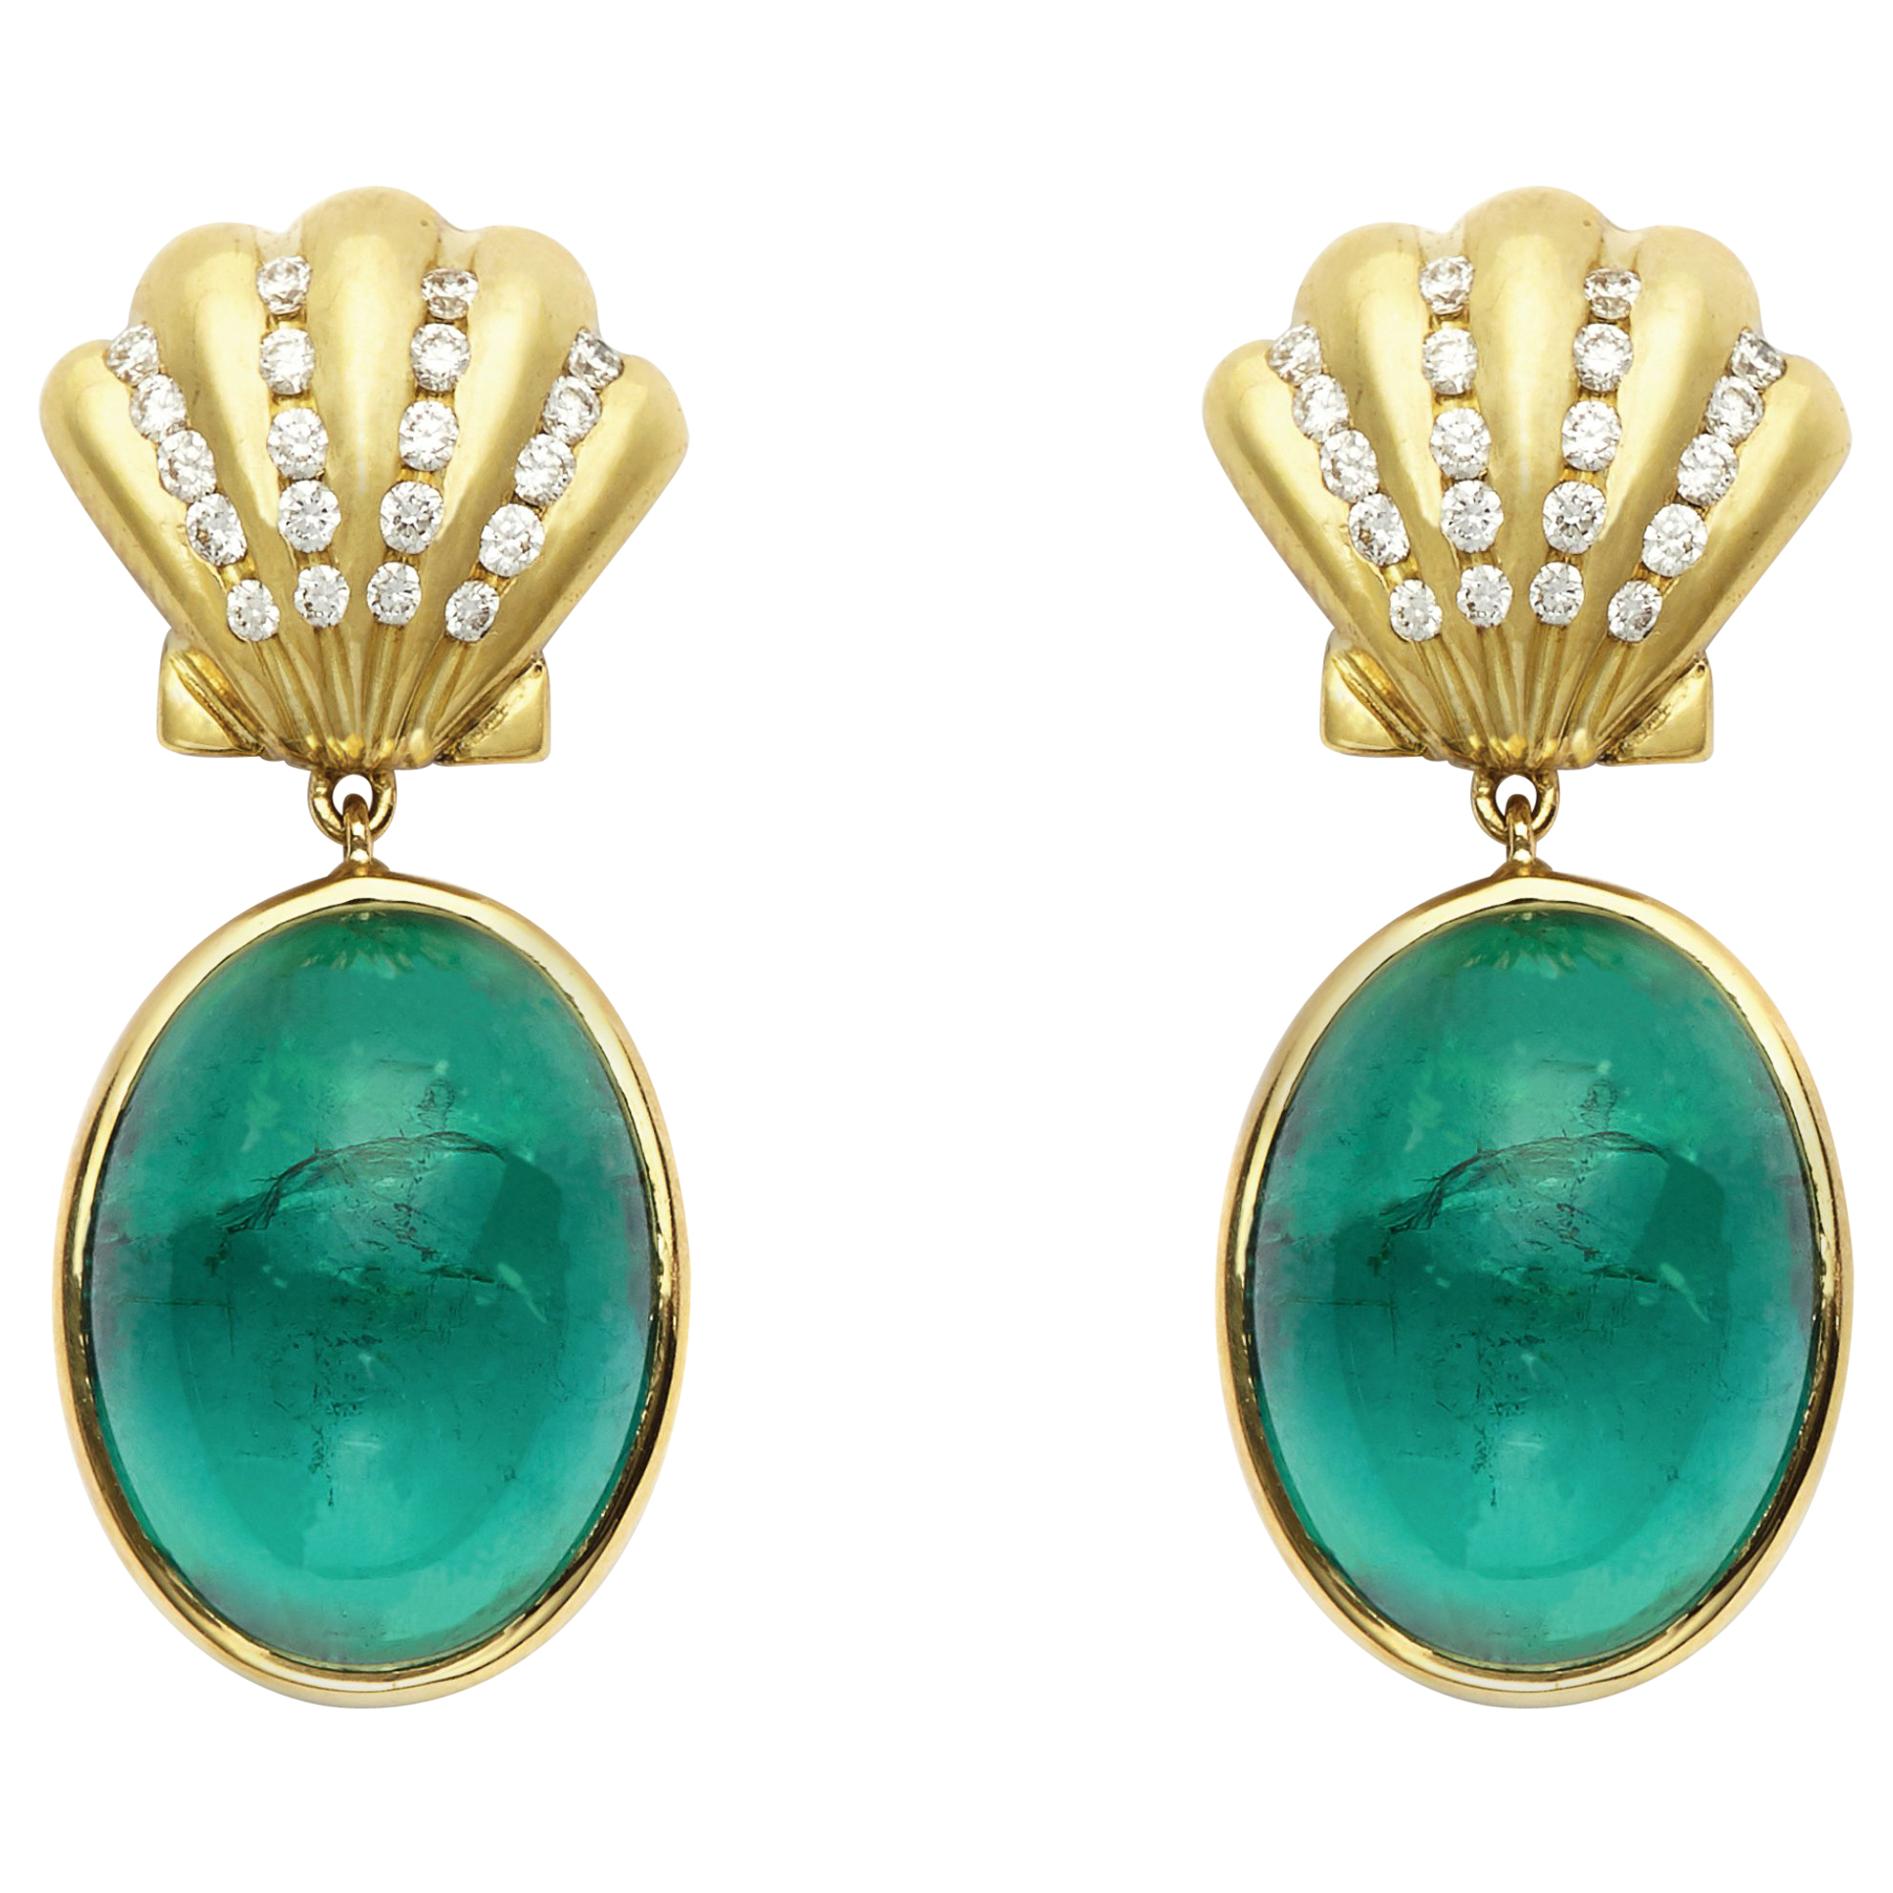 Green Cabochon Cut Tourmaline Earrings with 18 Karat Gold and Diamond Shells